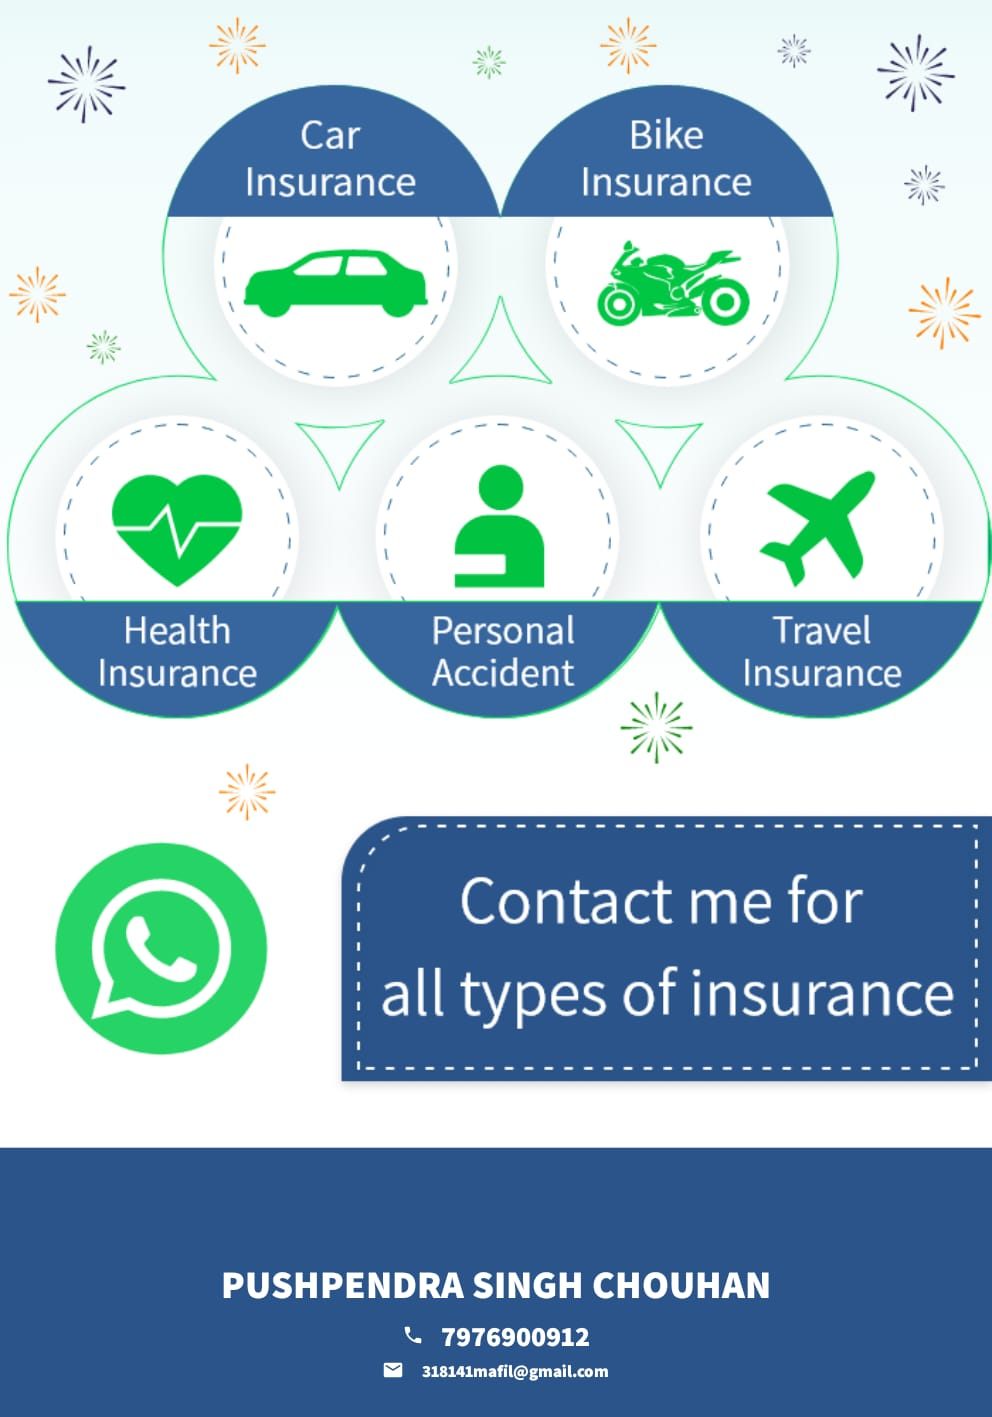 Automobile Insurance, Life Insurance, Health Insurance; Exp: 2 year